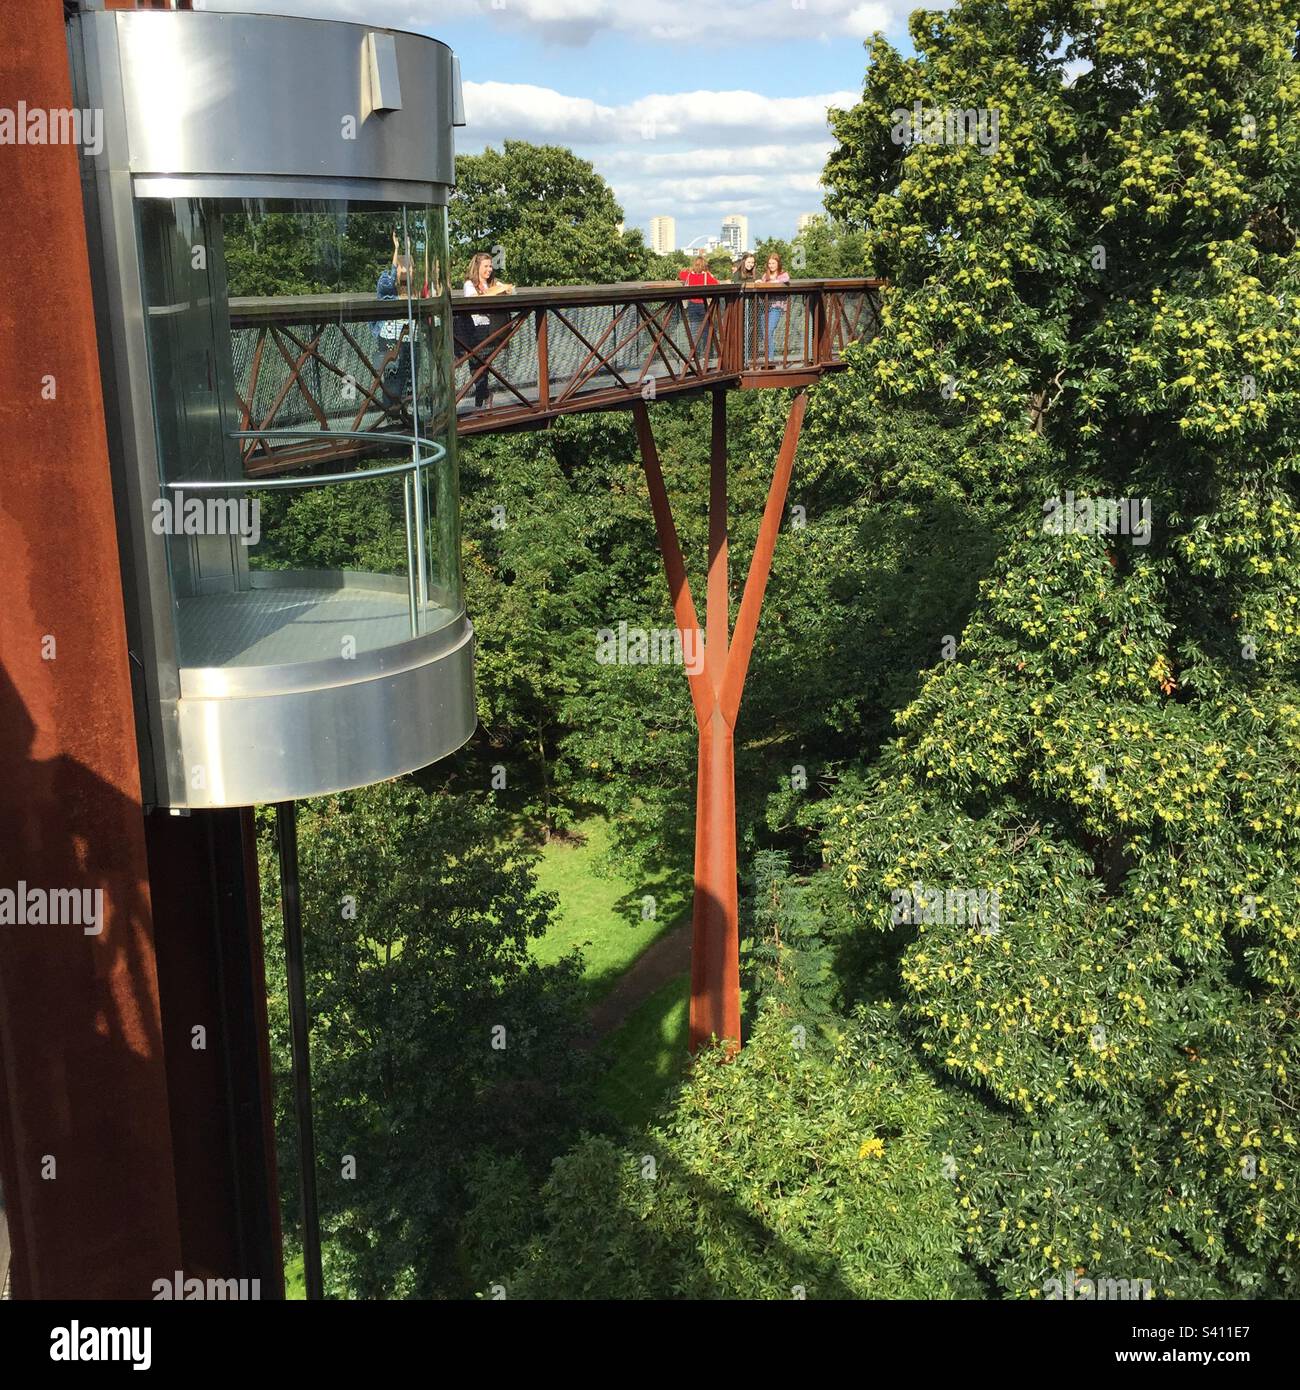 The Treetop Walkway at Kew Gardens, London, September 2015, Pic 43. Stock Photo